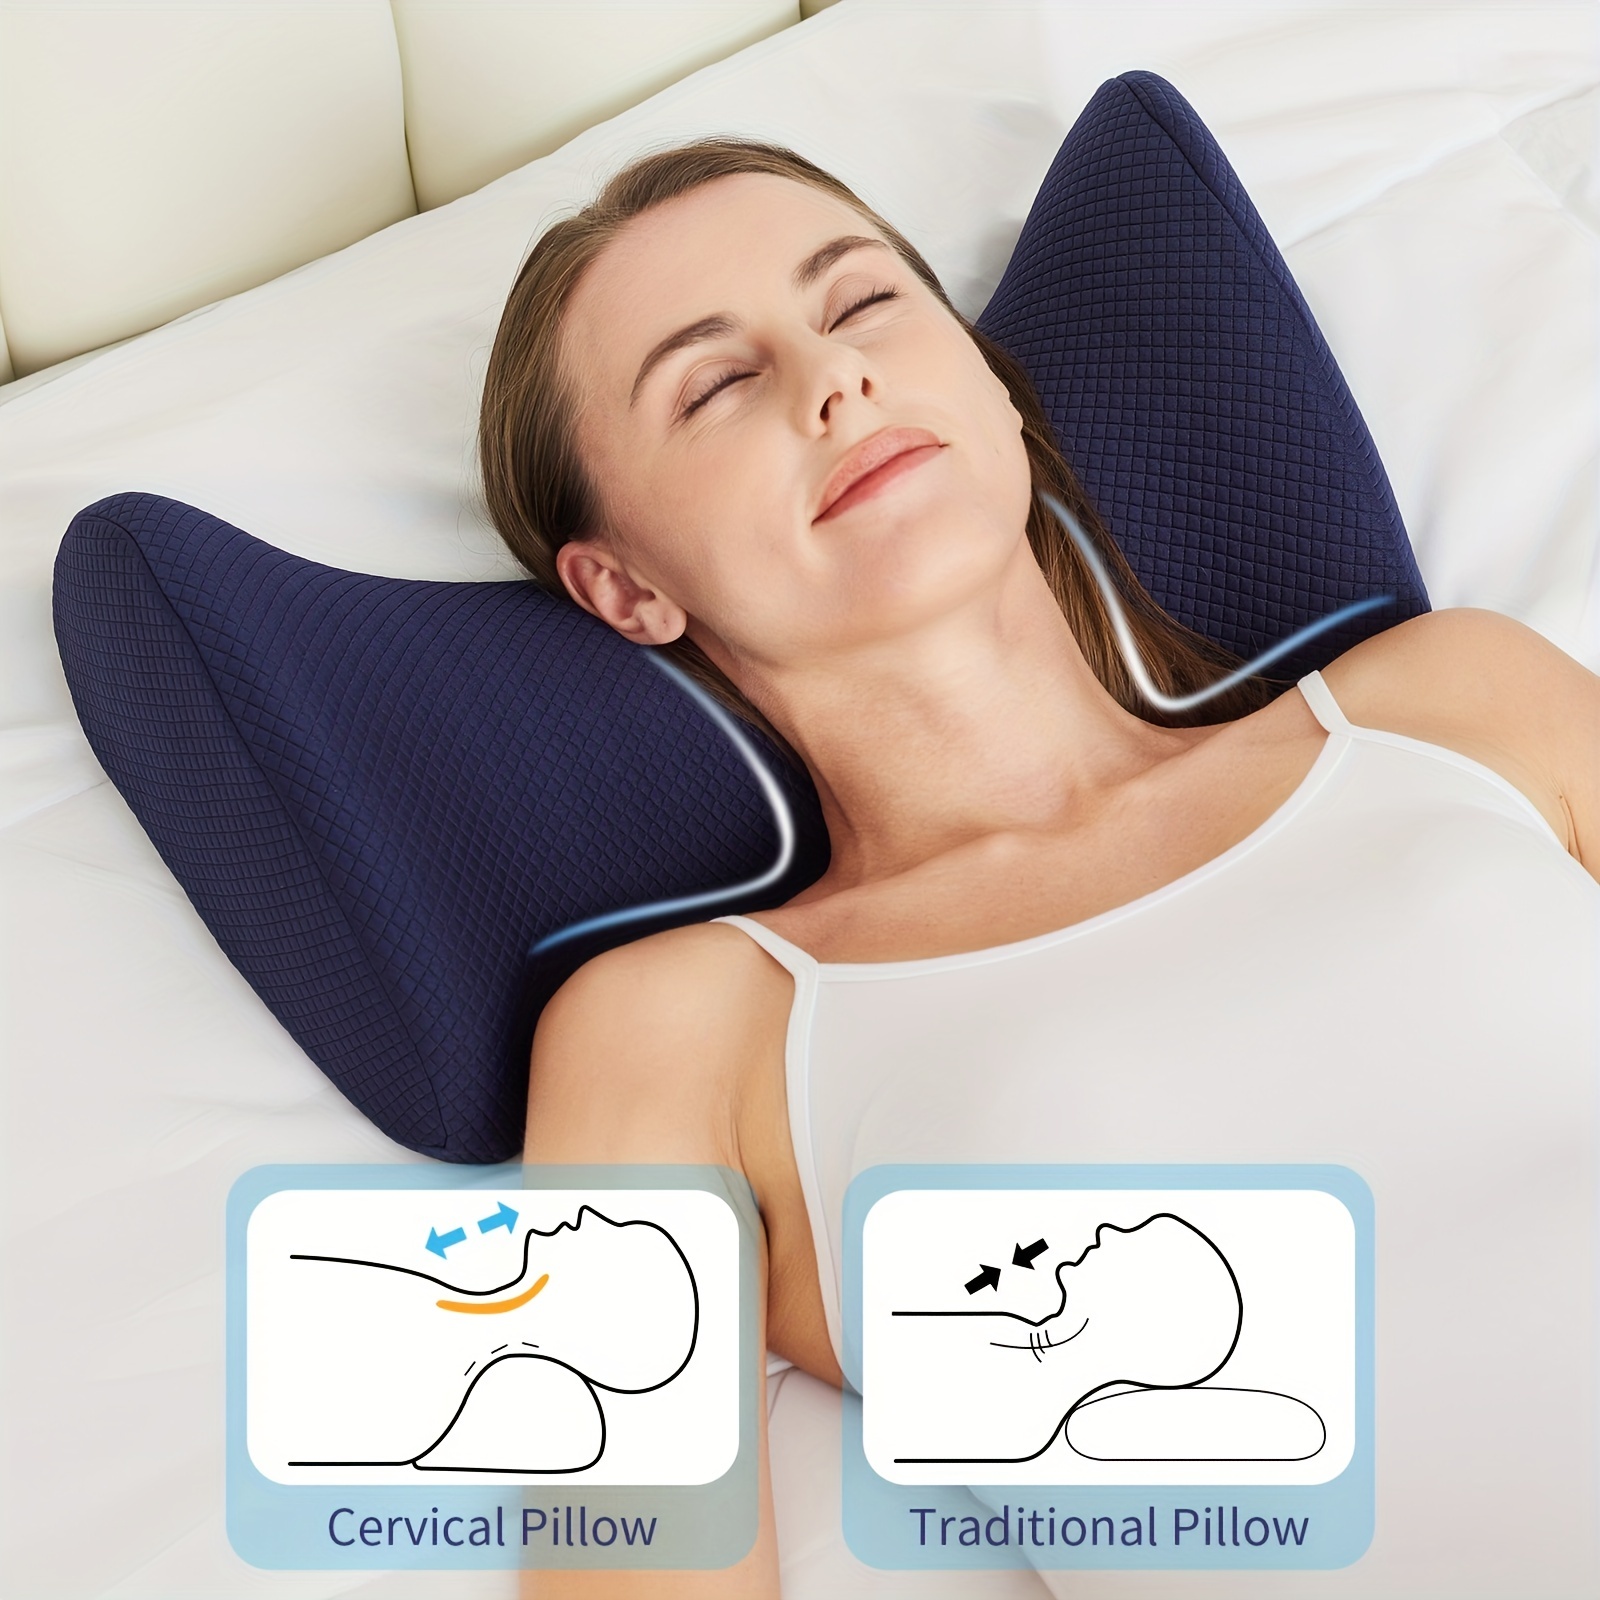 1pc Sleep Waist Support Cushion For Pregnant Women & Lumbar Pillow For Bed